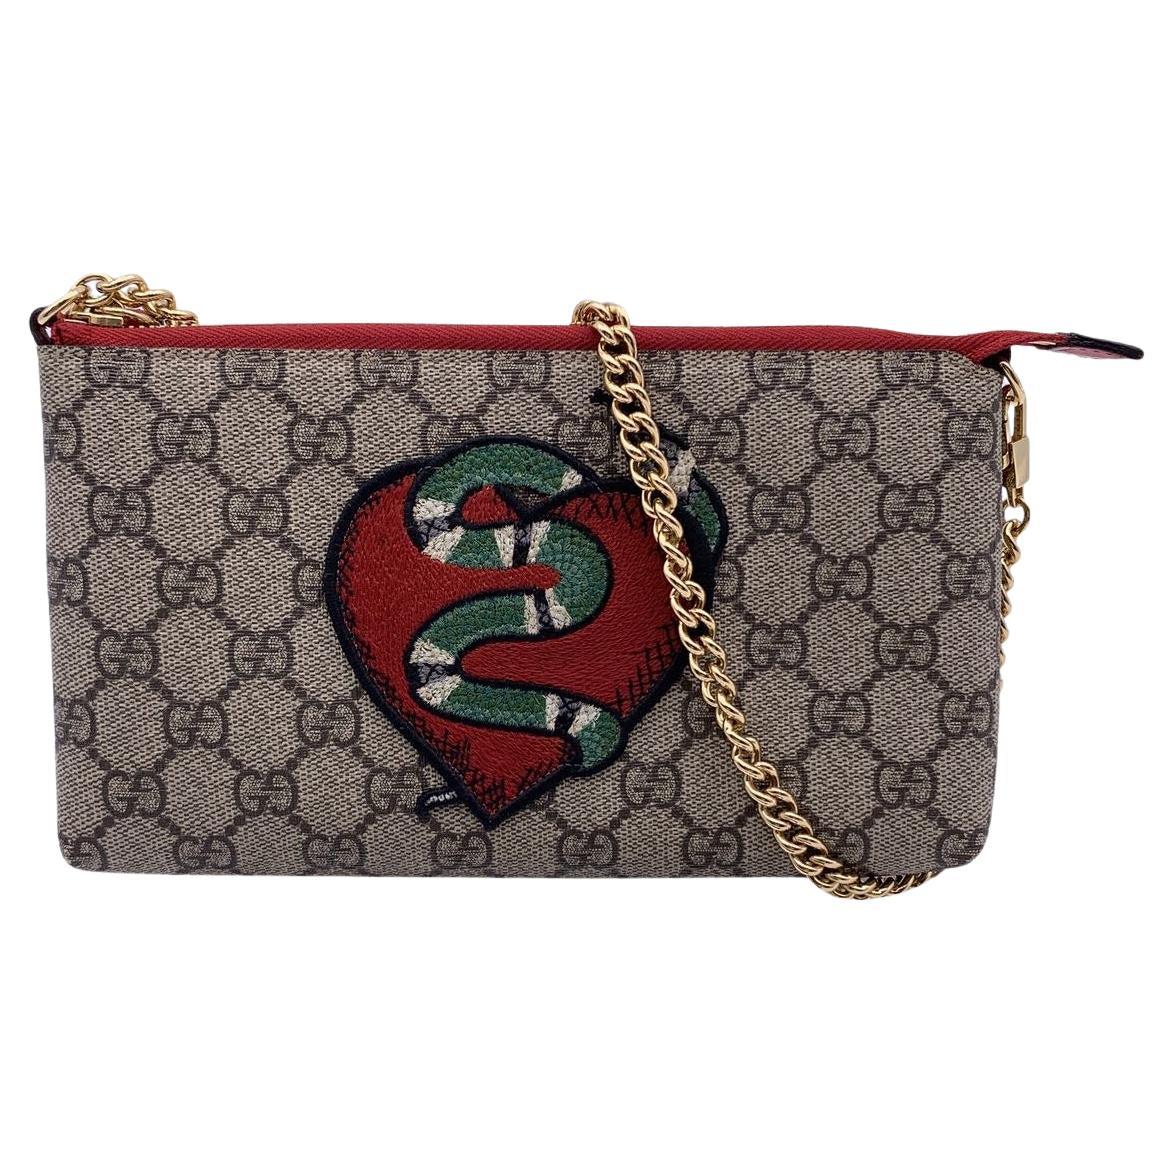 Gucci Limited Edition GG Supreme Kingsnake Heart Pochette Bag